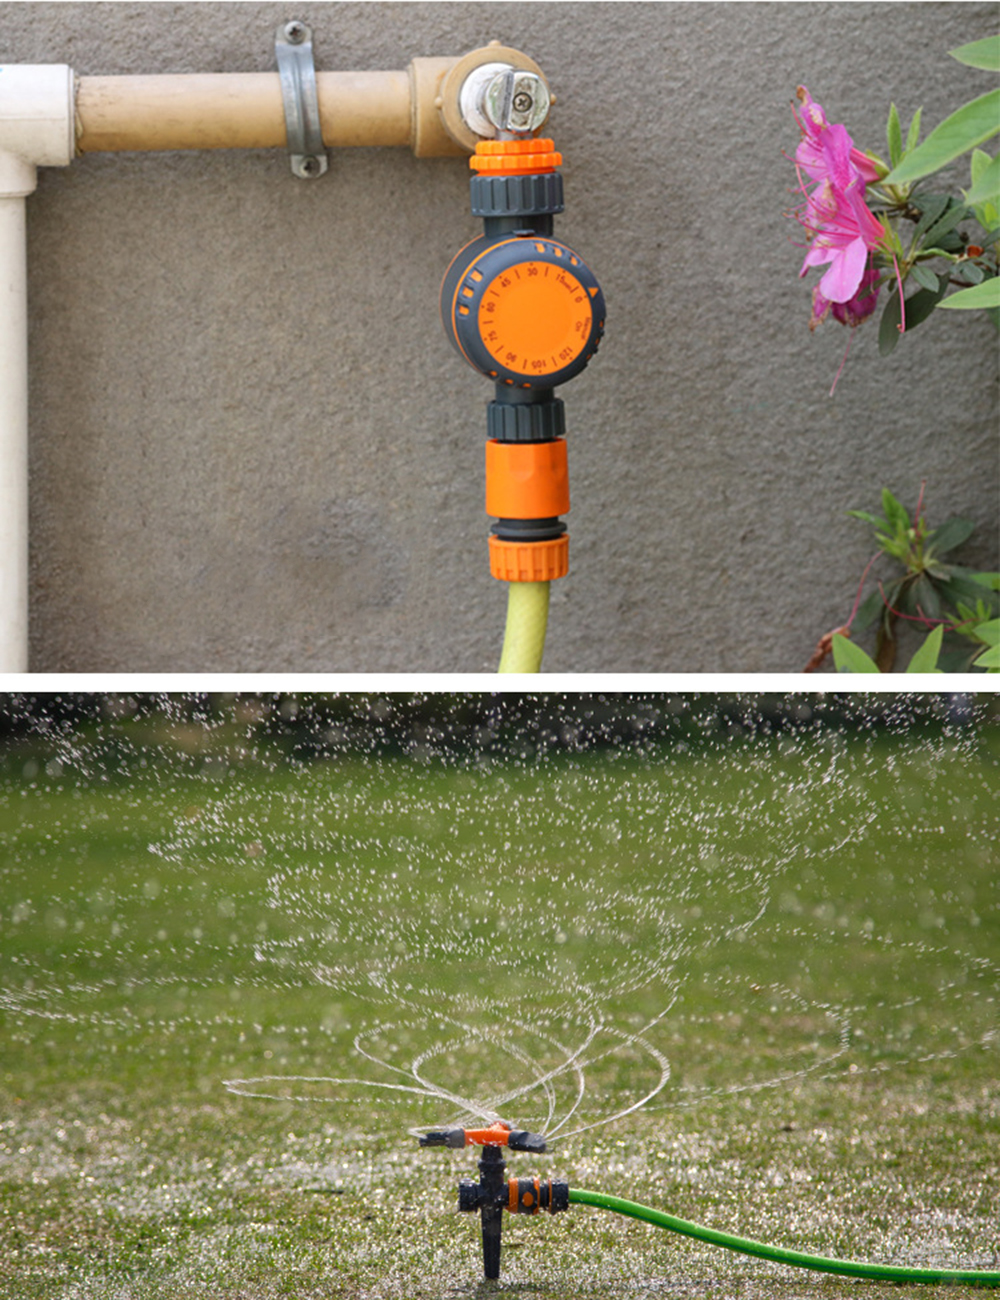 Mechanical-Irrigation-Controller-Watering-Timer-Garden-Irrigation-Timer-120-Minutes-Water-Flow-Singl-1758006